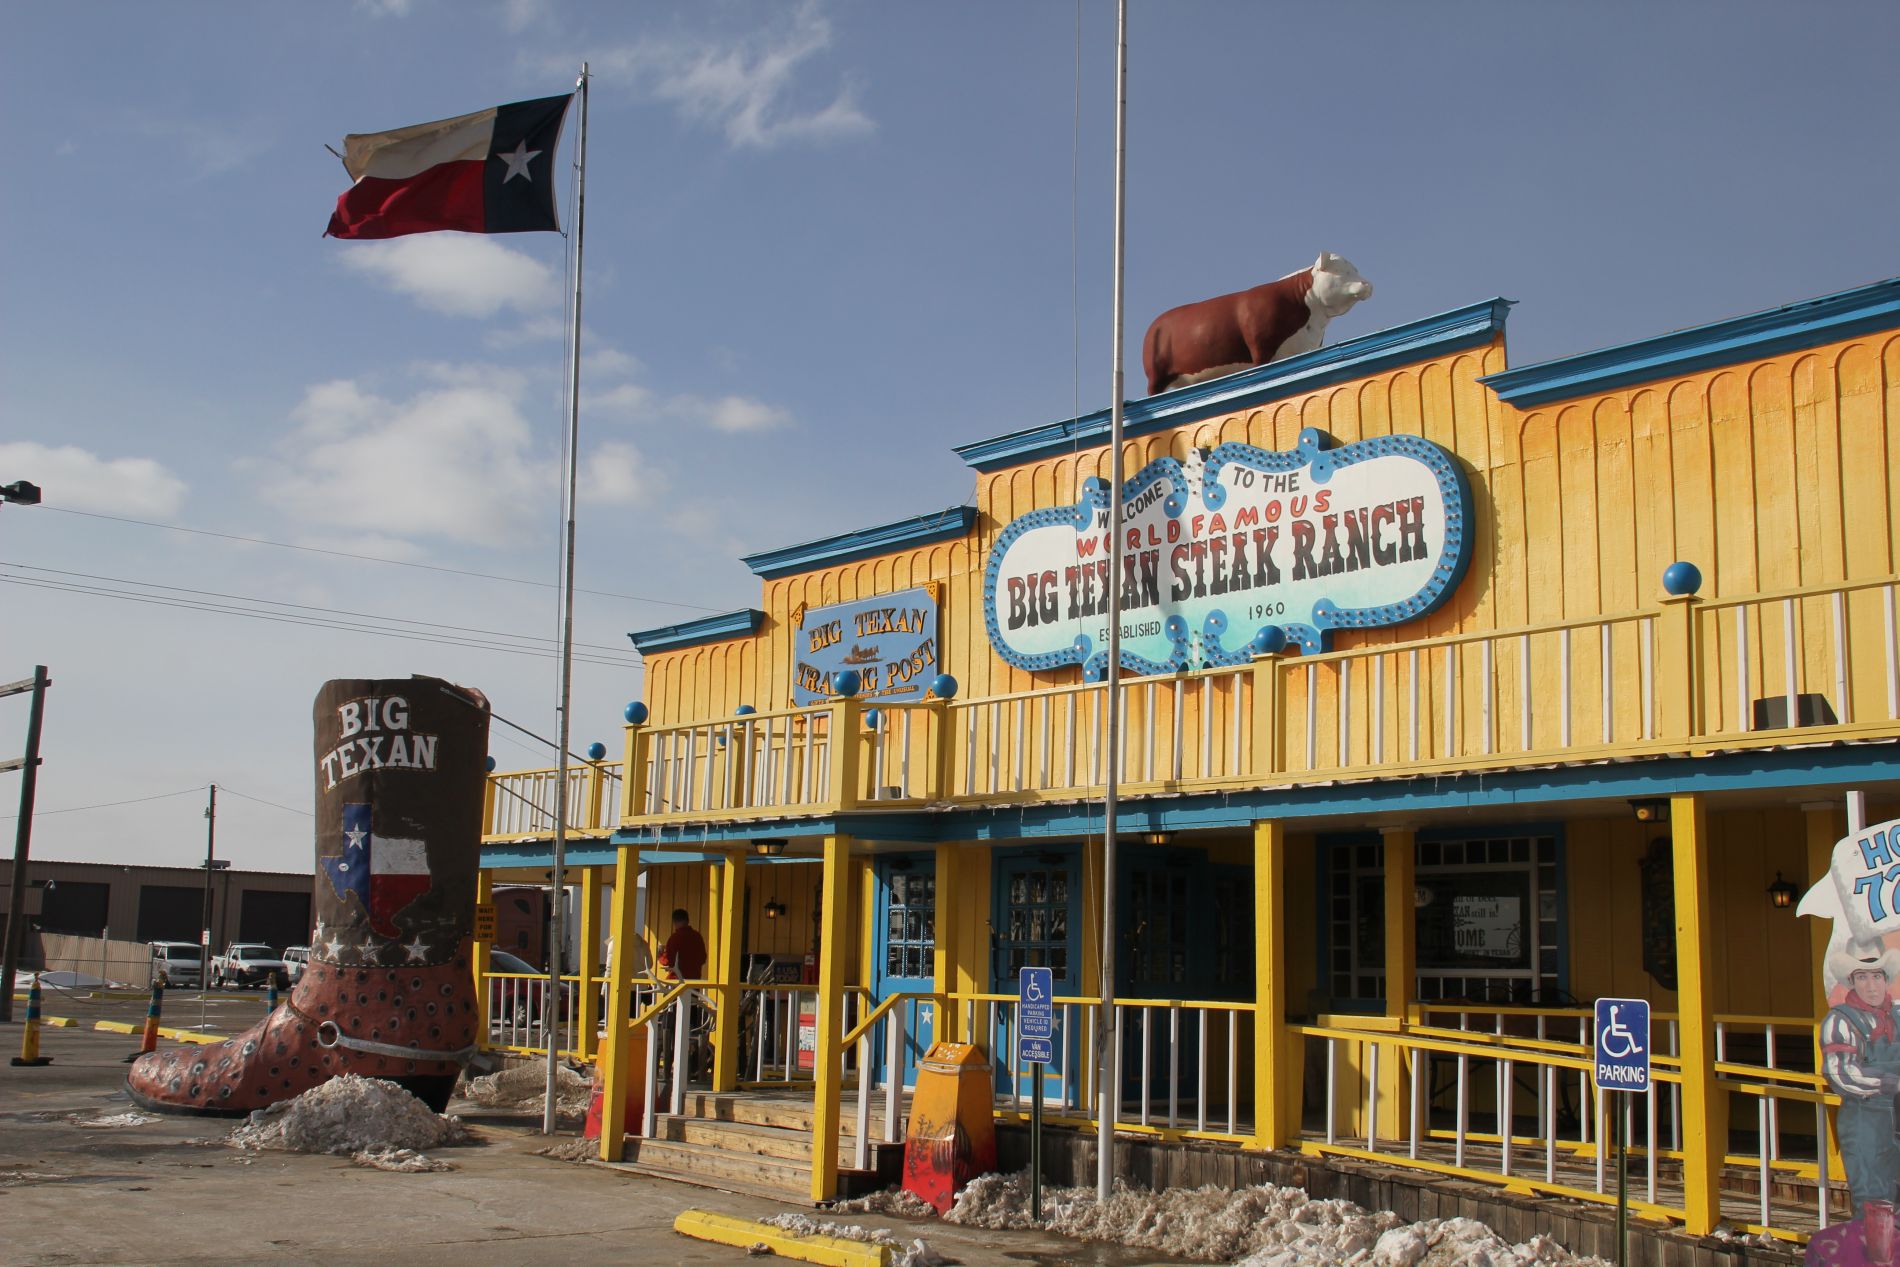 The Big Texan Steak Ranch in Amarillo, Texas